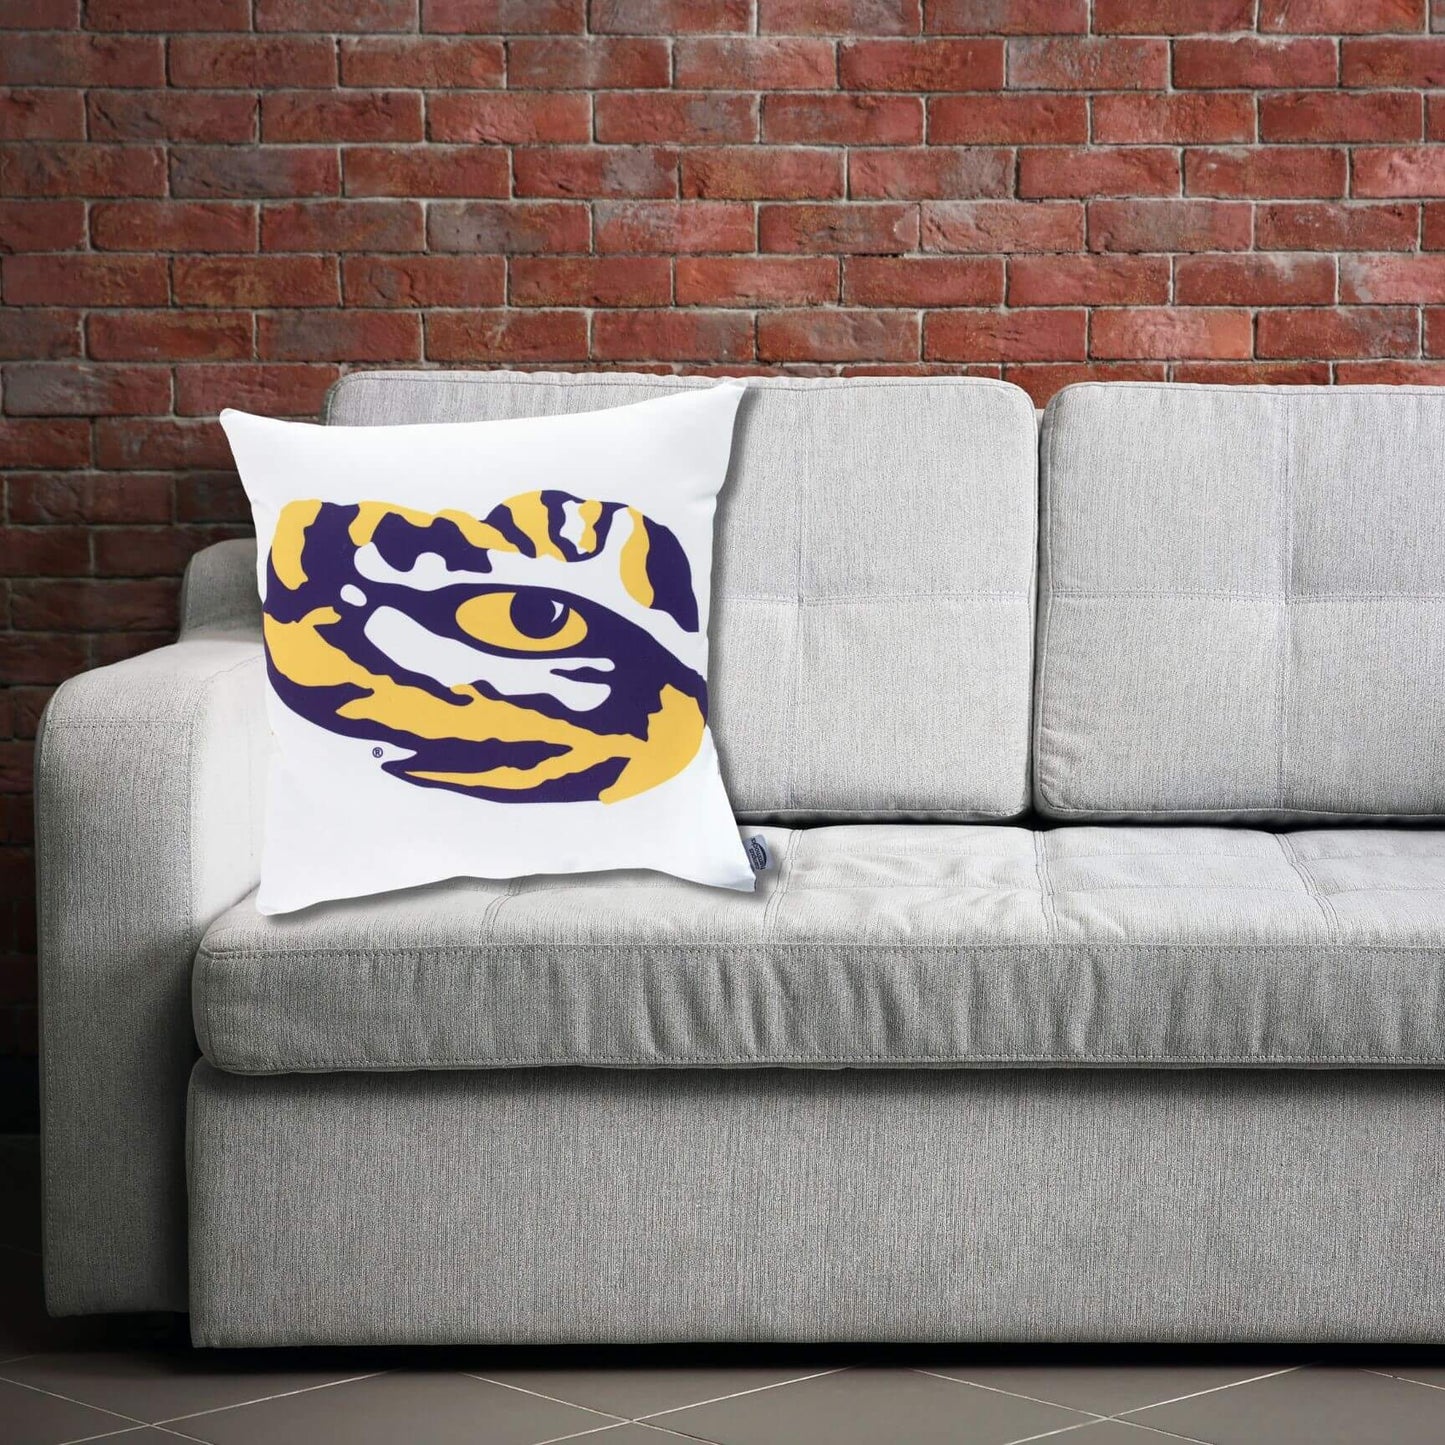 LSU Tigers Sofa Throw Pillow Cover